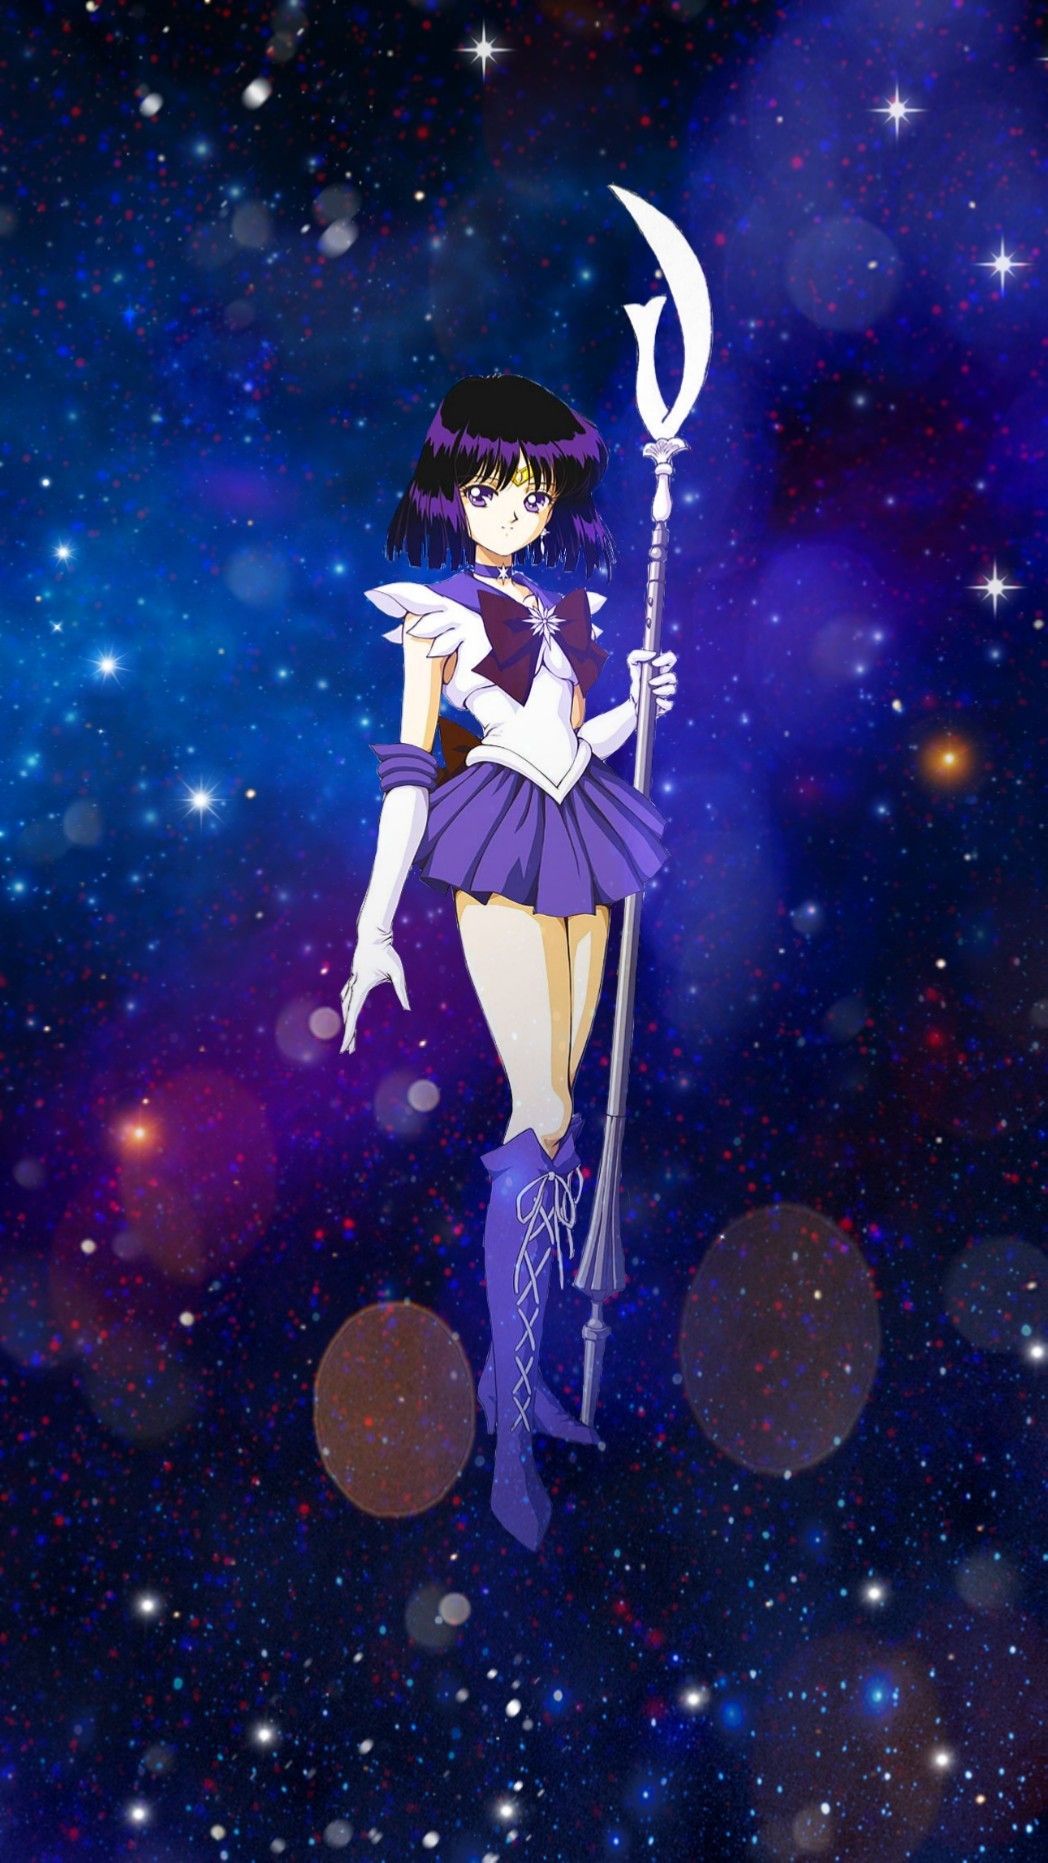 siyahoje on Twitter Sailor Moon  Saturn  wallpaper Wallpapers  httpstcoxc8yBVCZ3S  Twitter